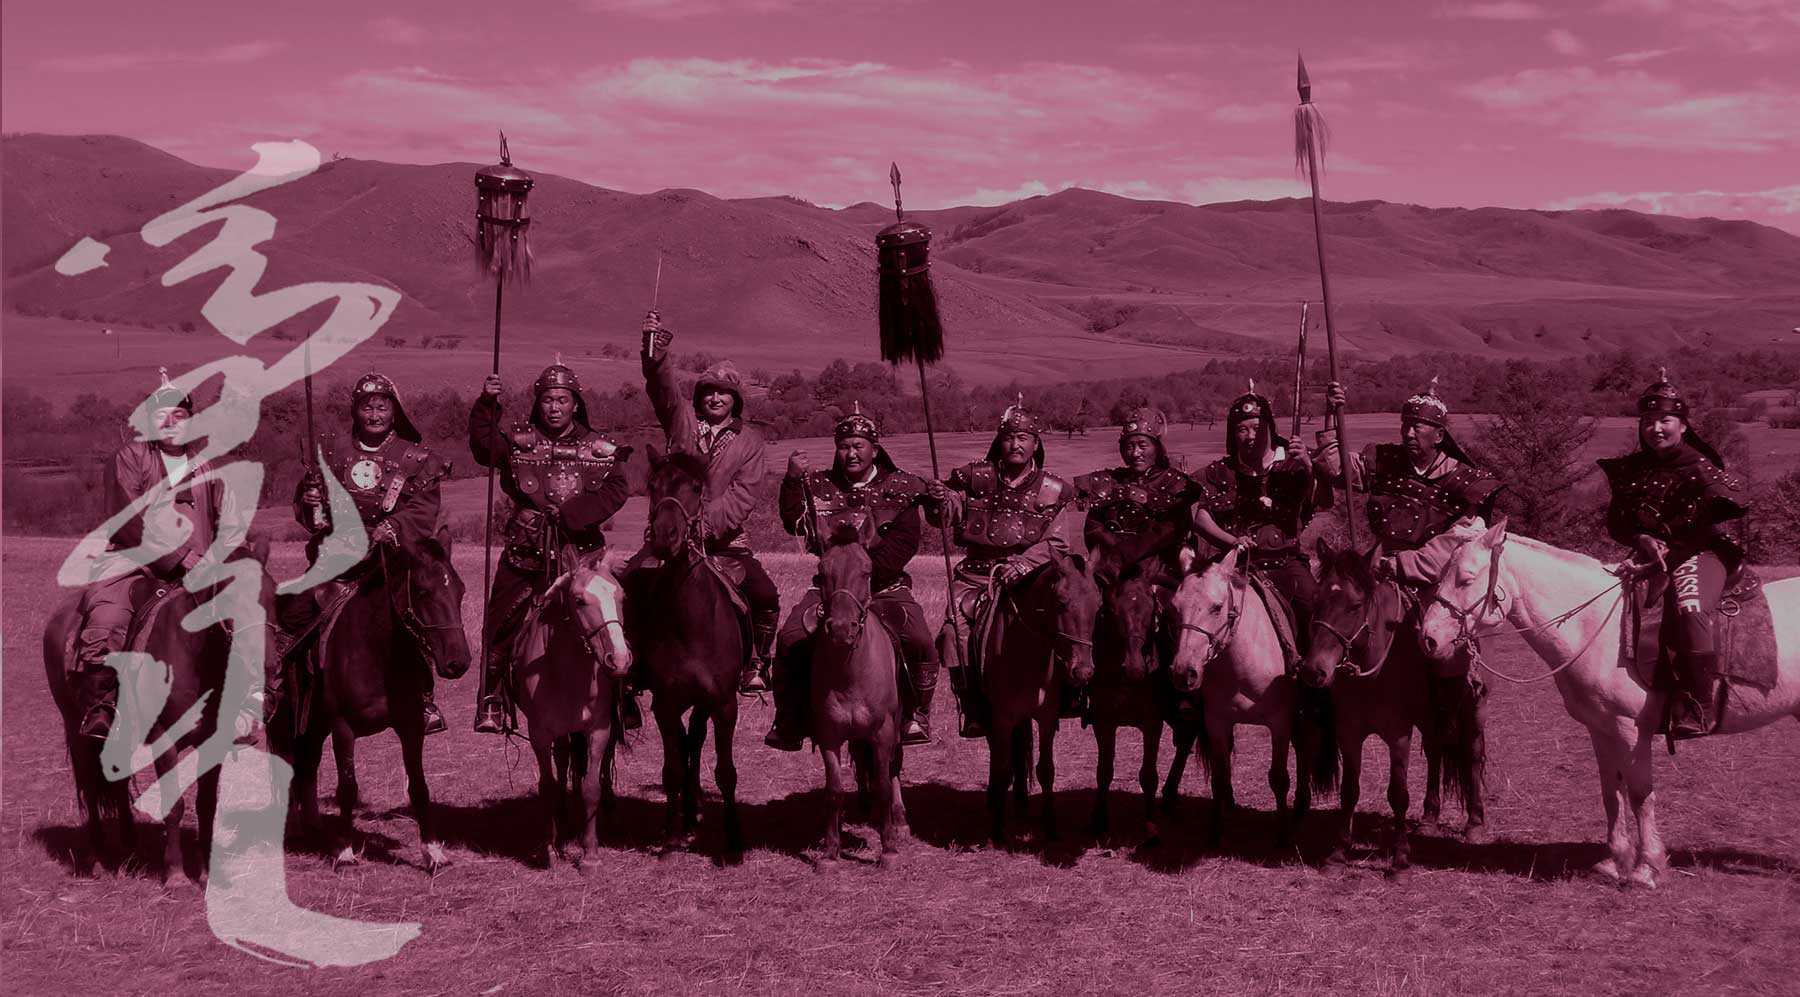 MONGOLIA TRAVEL PHOTOS - Mongol Warriors - Archery, Wrestling, Horses - Mongolia Nomads Tours